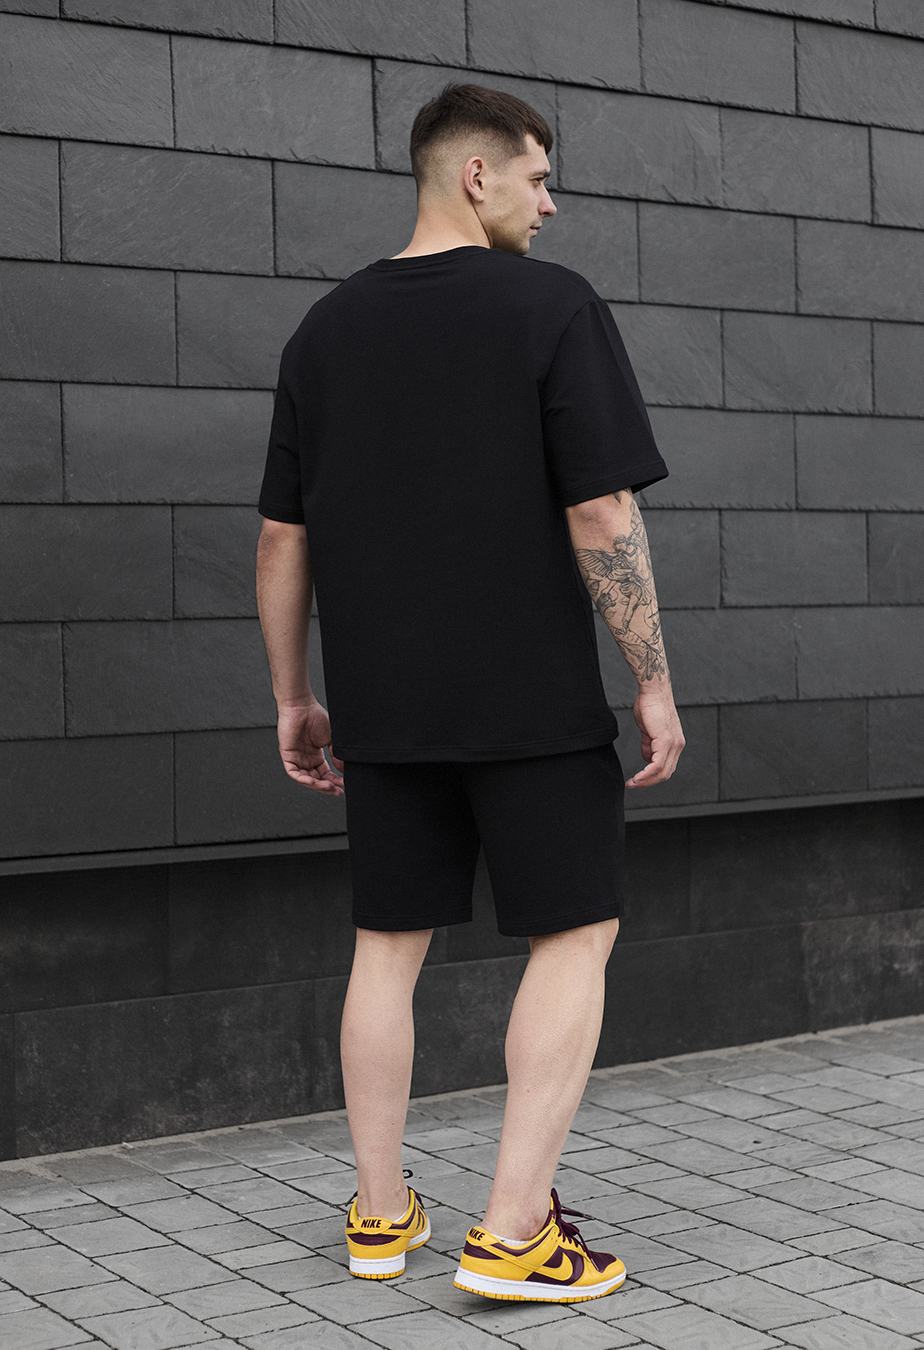 Letni komplet: koszulka + szorty Staff ra black oversize